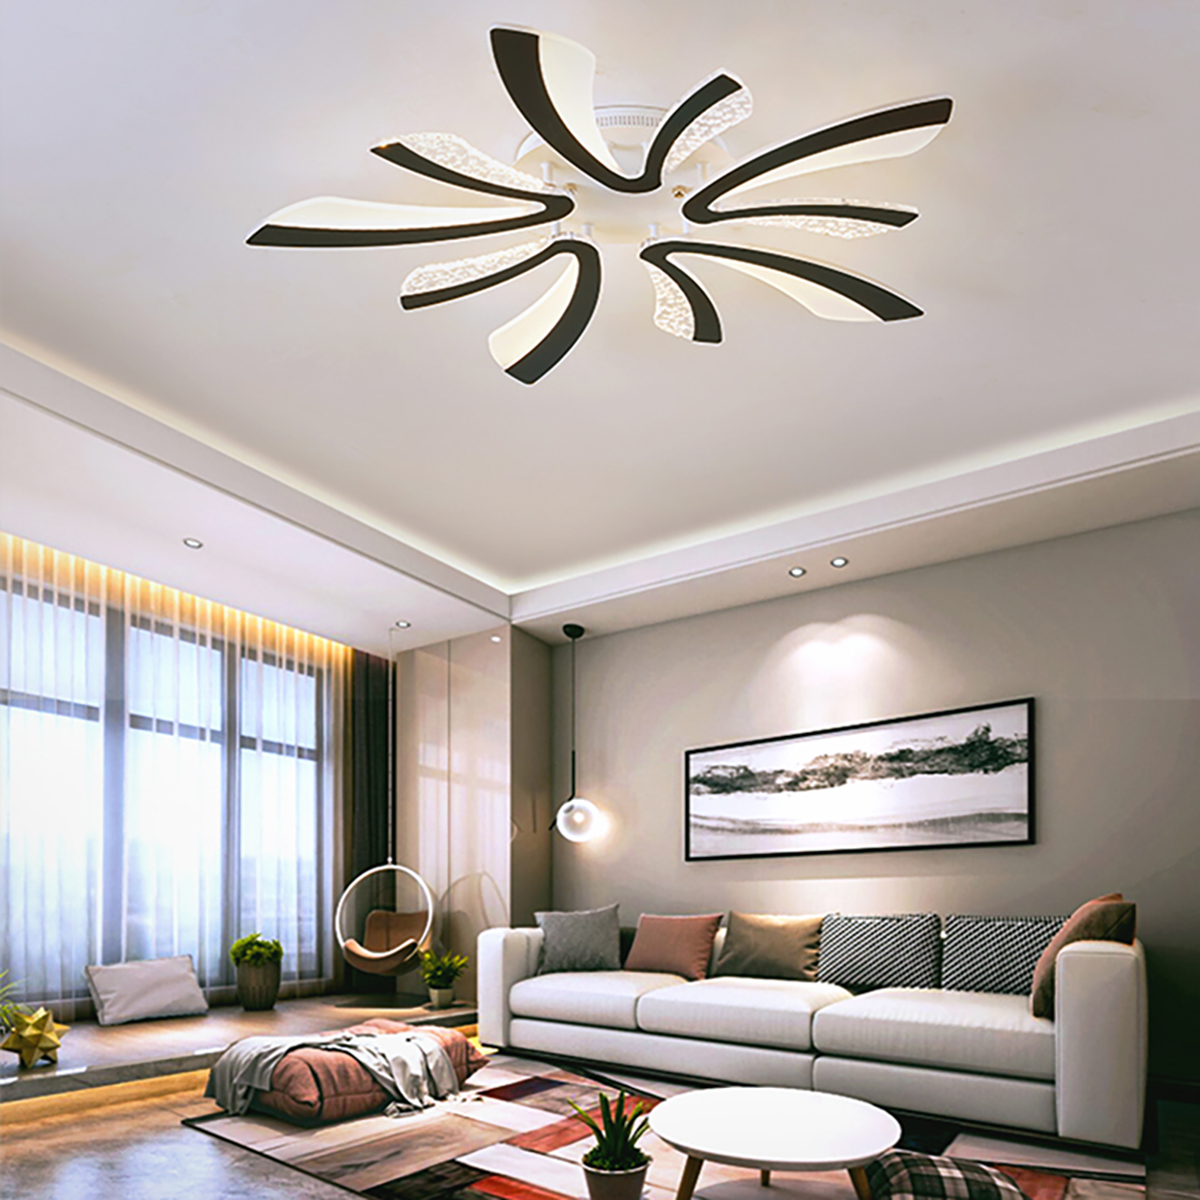 2440W-85V-265V-LED-Ceiling-Light-Pendant-Lamp-Dimmable-Remote-Hallway-Living-Room-Fixture-Decor-1745018-5